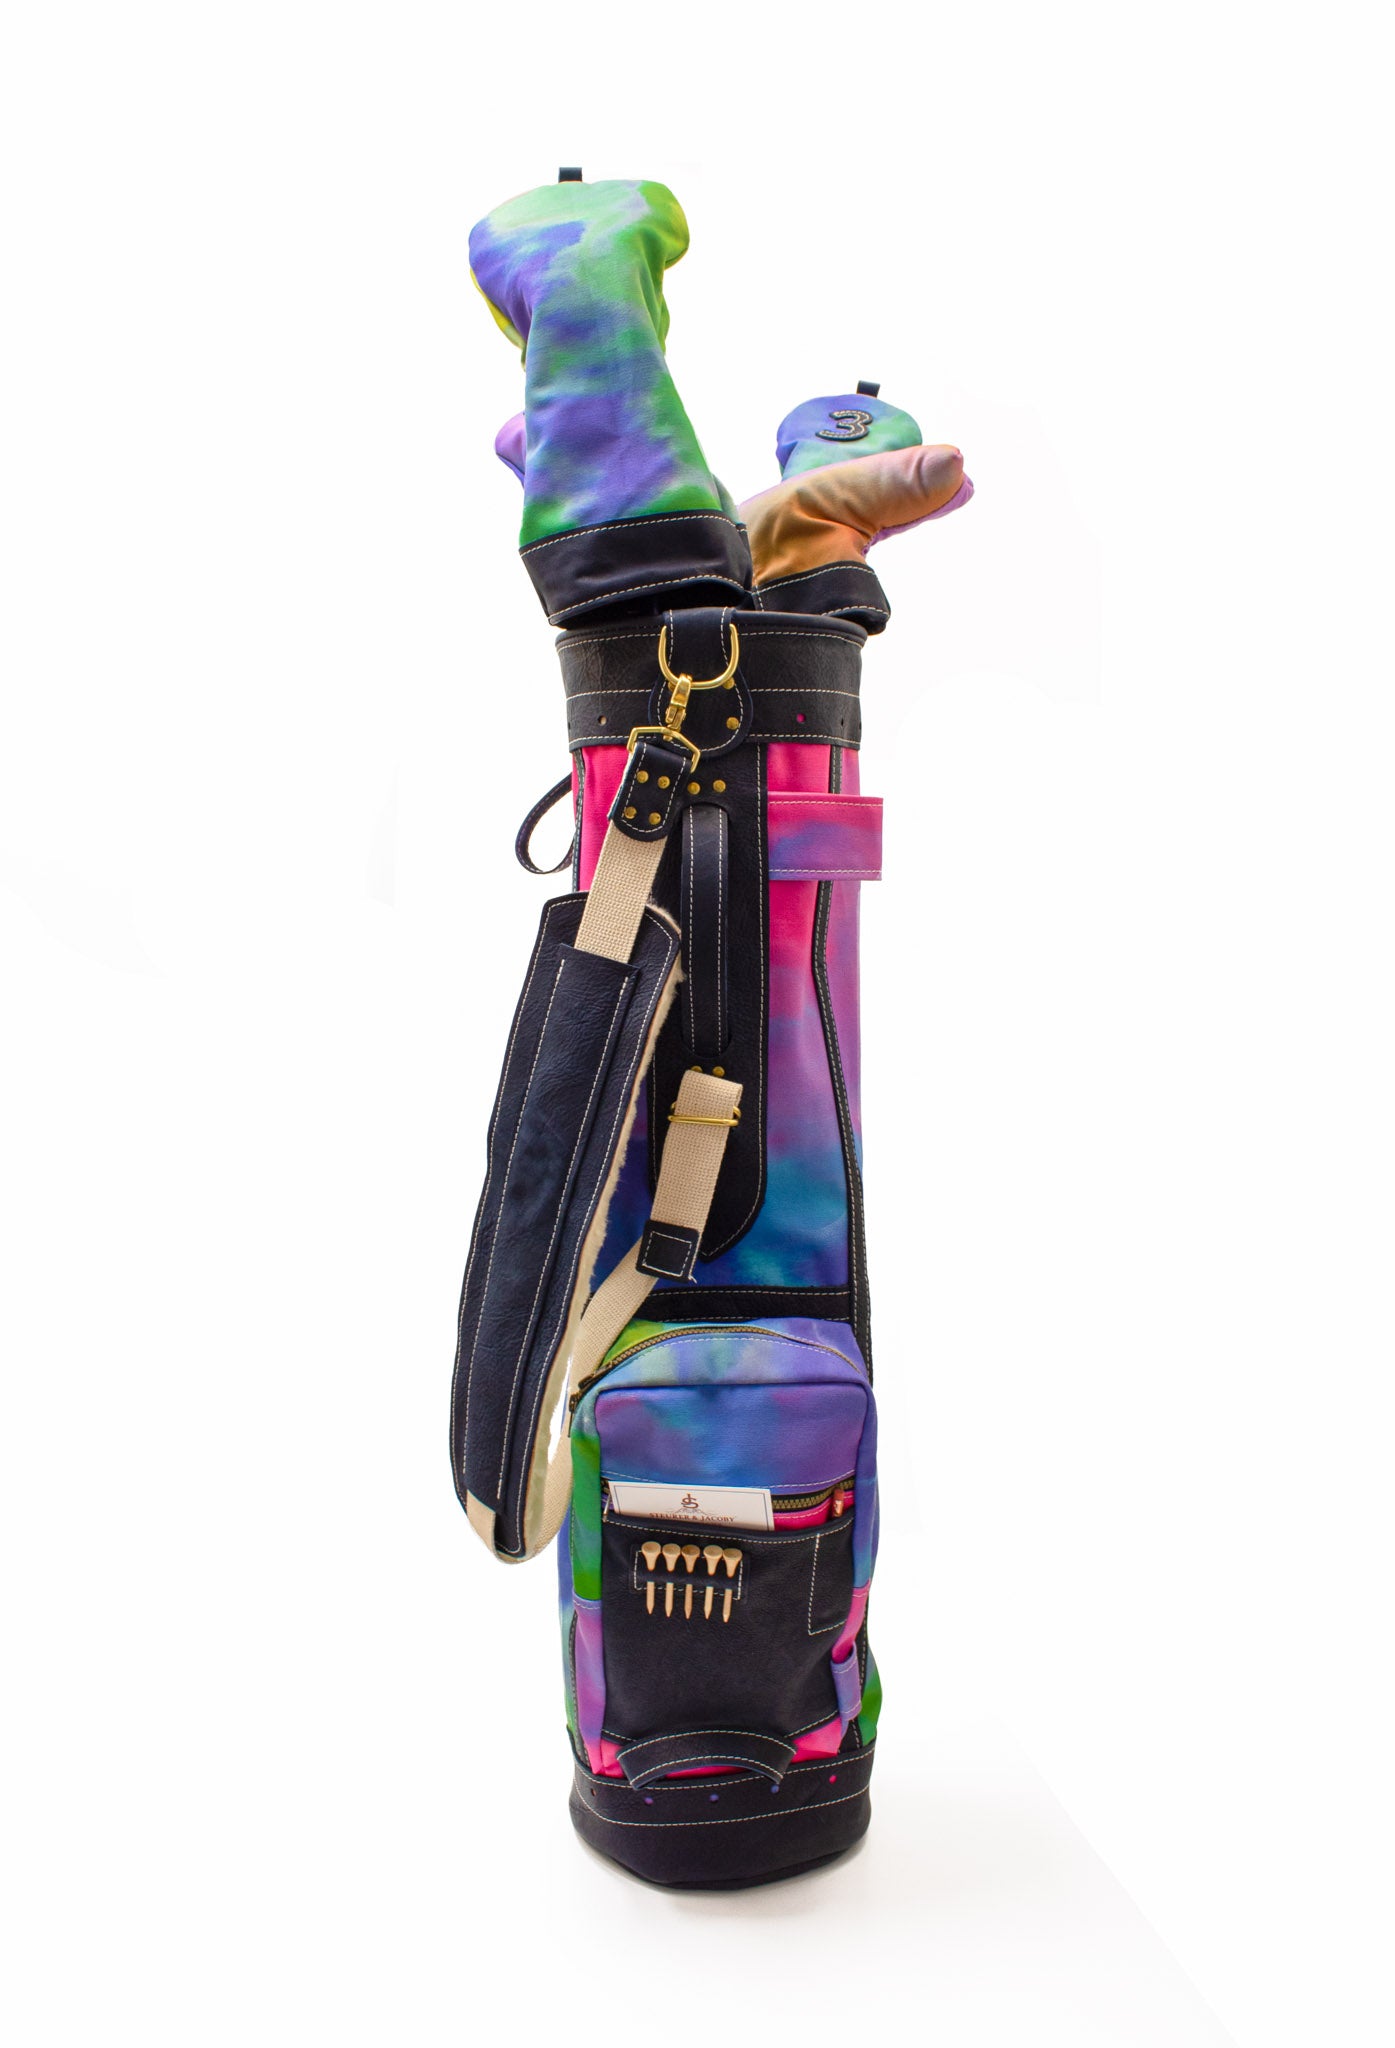 Should You Buy These Tie-Dye Louis Vuitton Bags? 